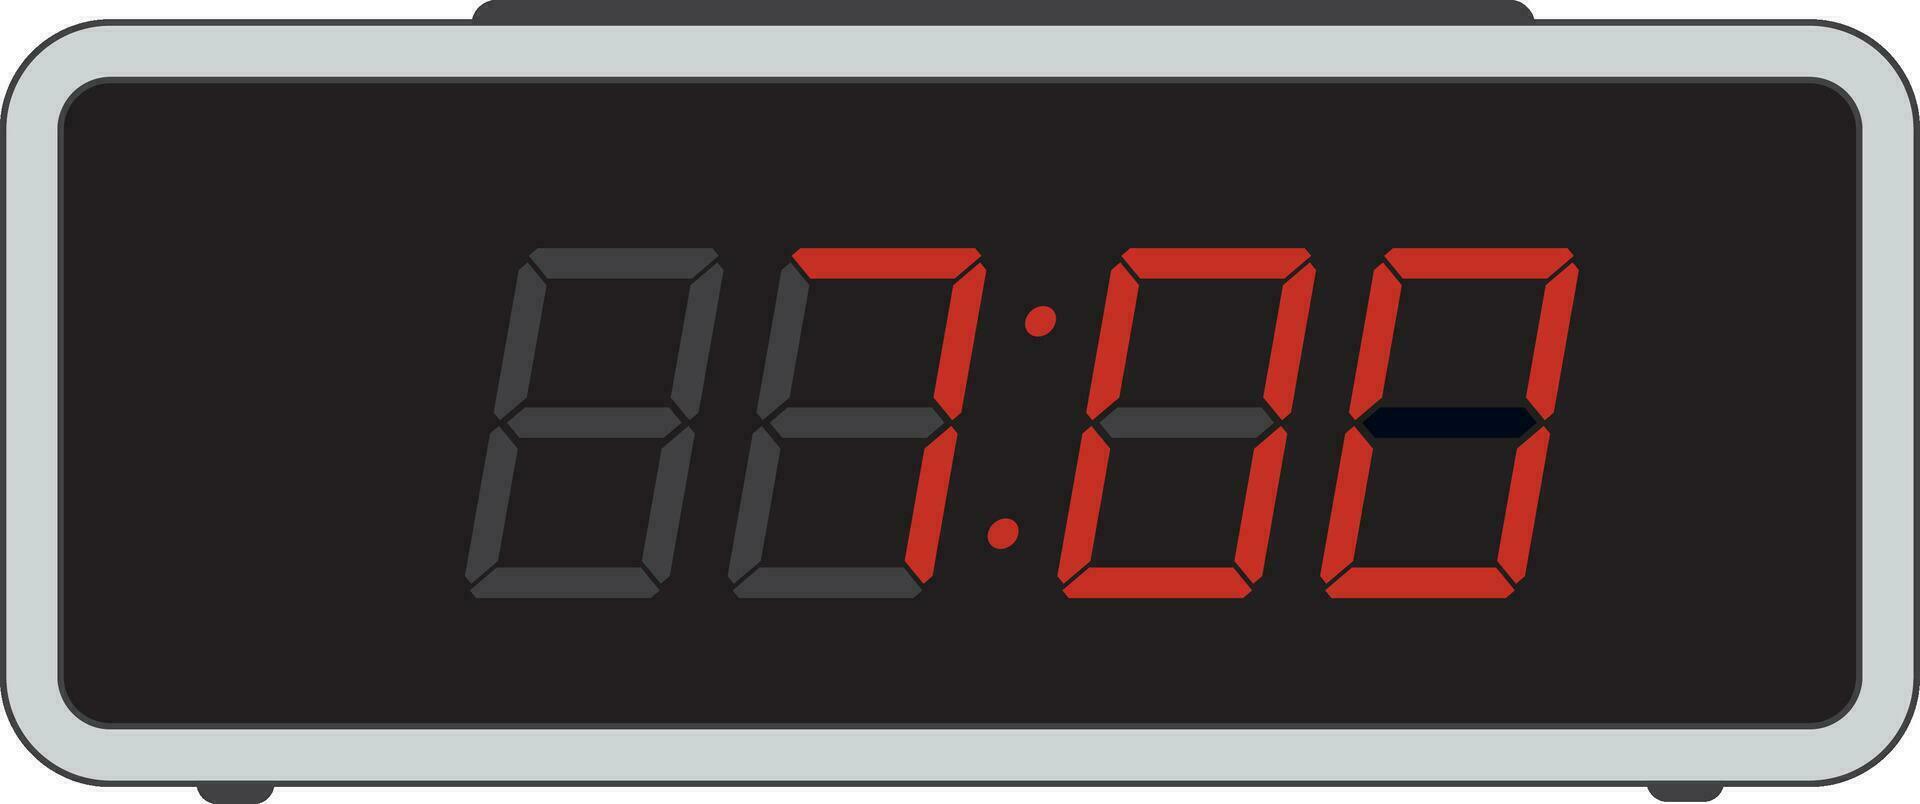 digital negro alarma reloj mostrando 7.00 reloj logo diseño. digital reloj con rojo números. hora a despertar arriba, atender reunión o cita, anillo rebotar alarma reloj vector